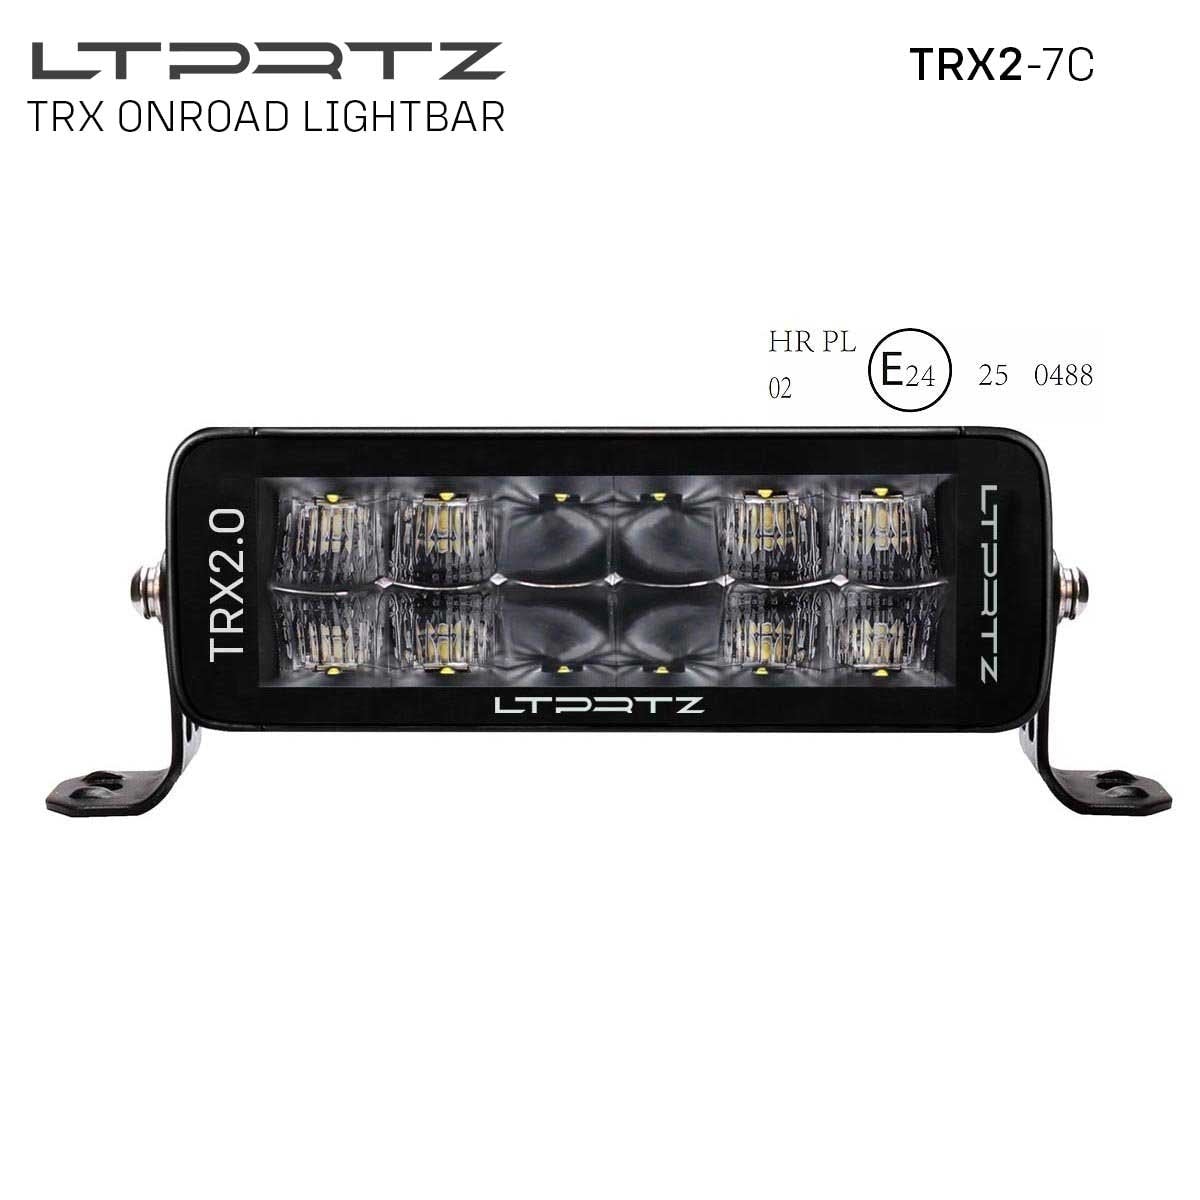 trekvoss - Lightpartz 36W 7 TRX 2.0 Combo Onroad Lightbar ECE